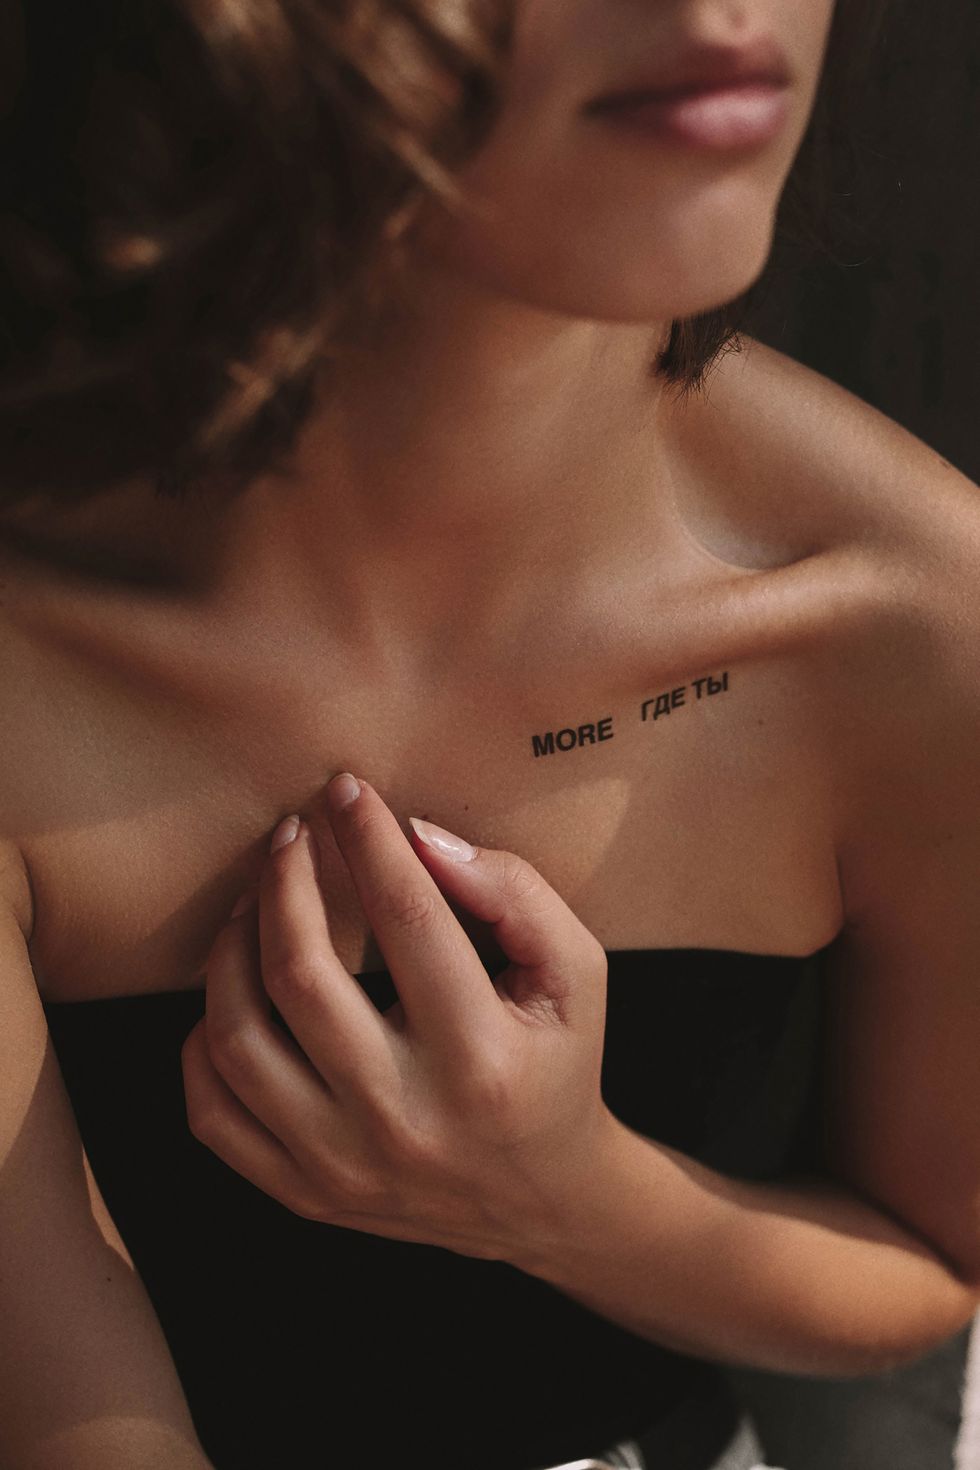 tatuajes palabras ideas, tatuaje palabra inspiracion, tatuaje more